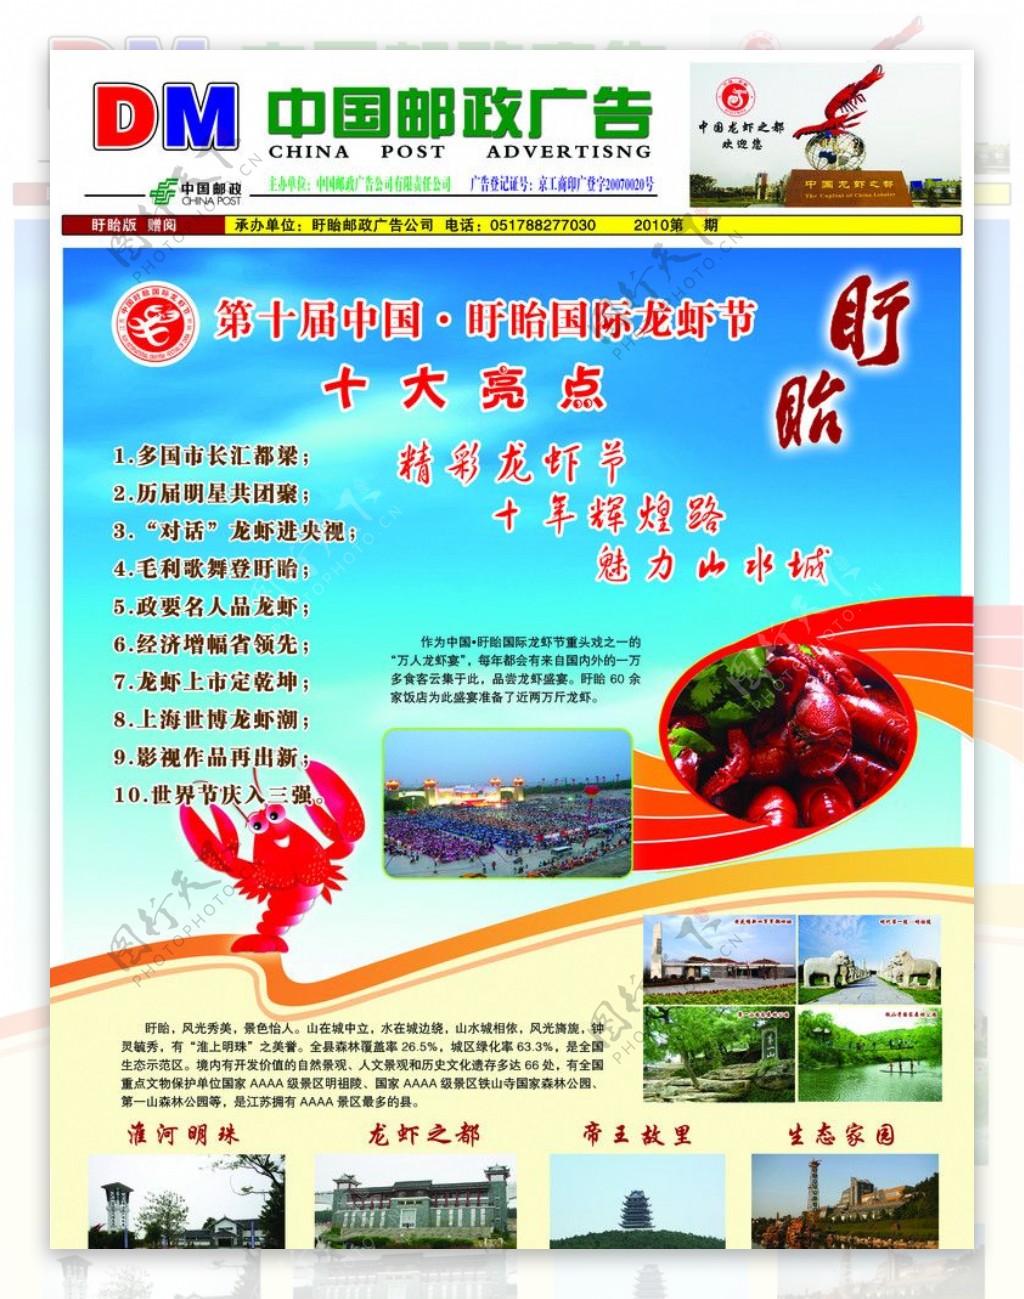 DM中国邮政广告图片